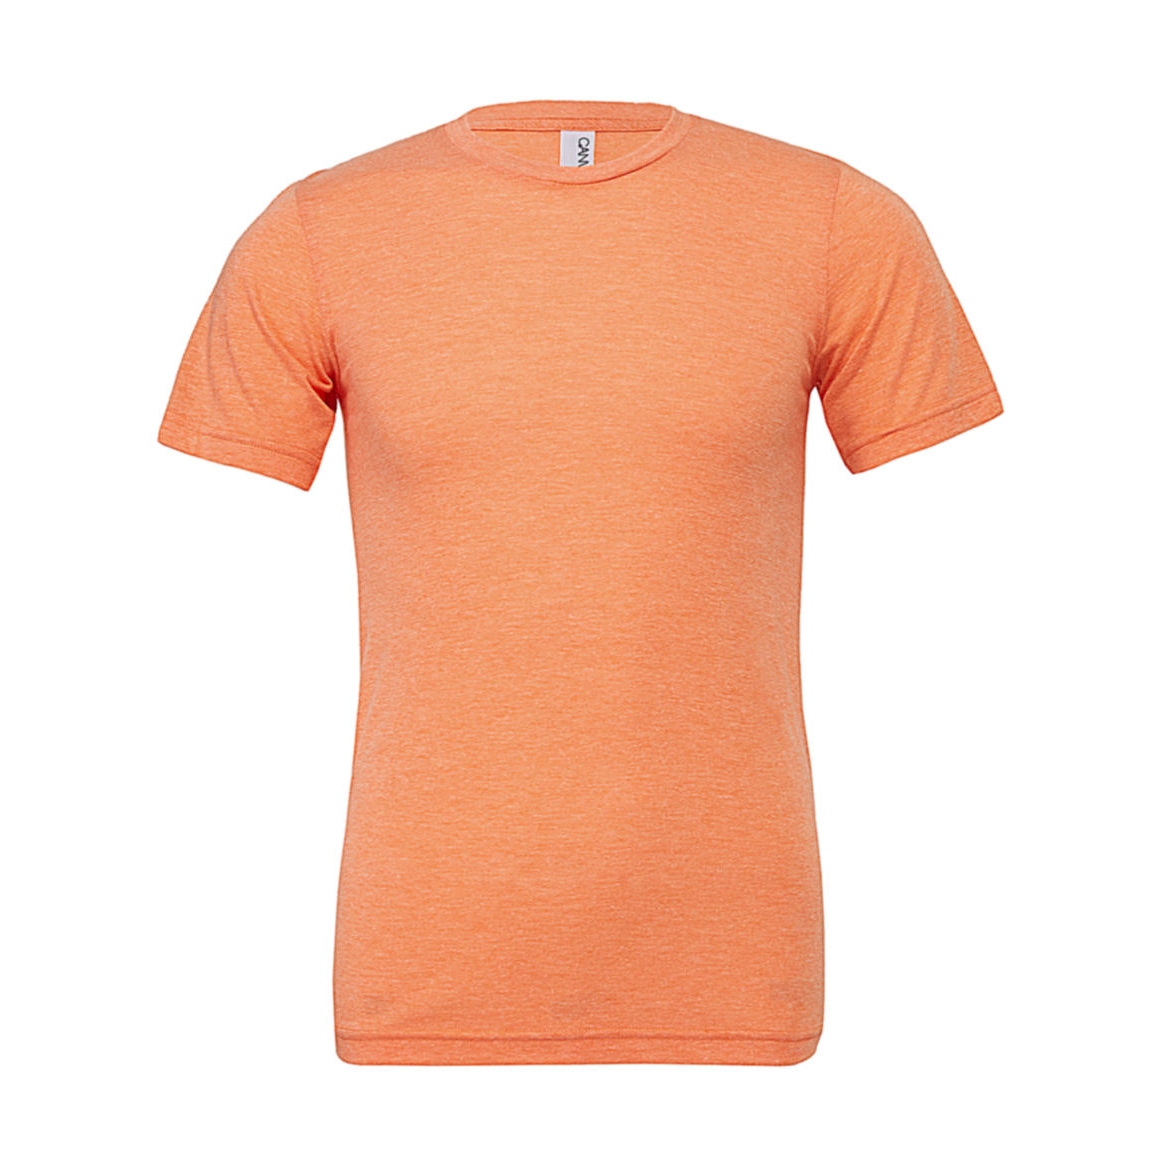 Tričko Bella Triblend Crew Men - oranžové, XL